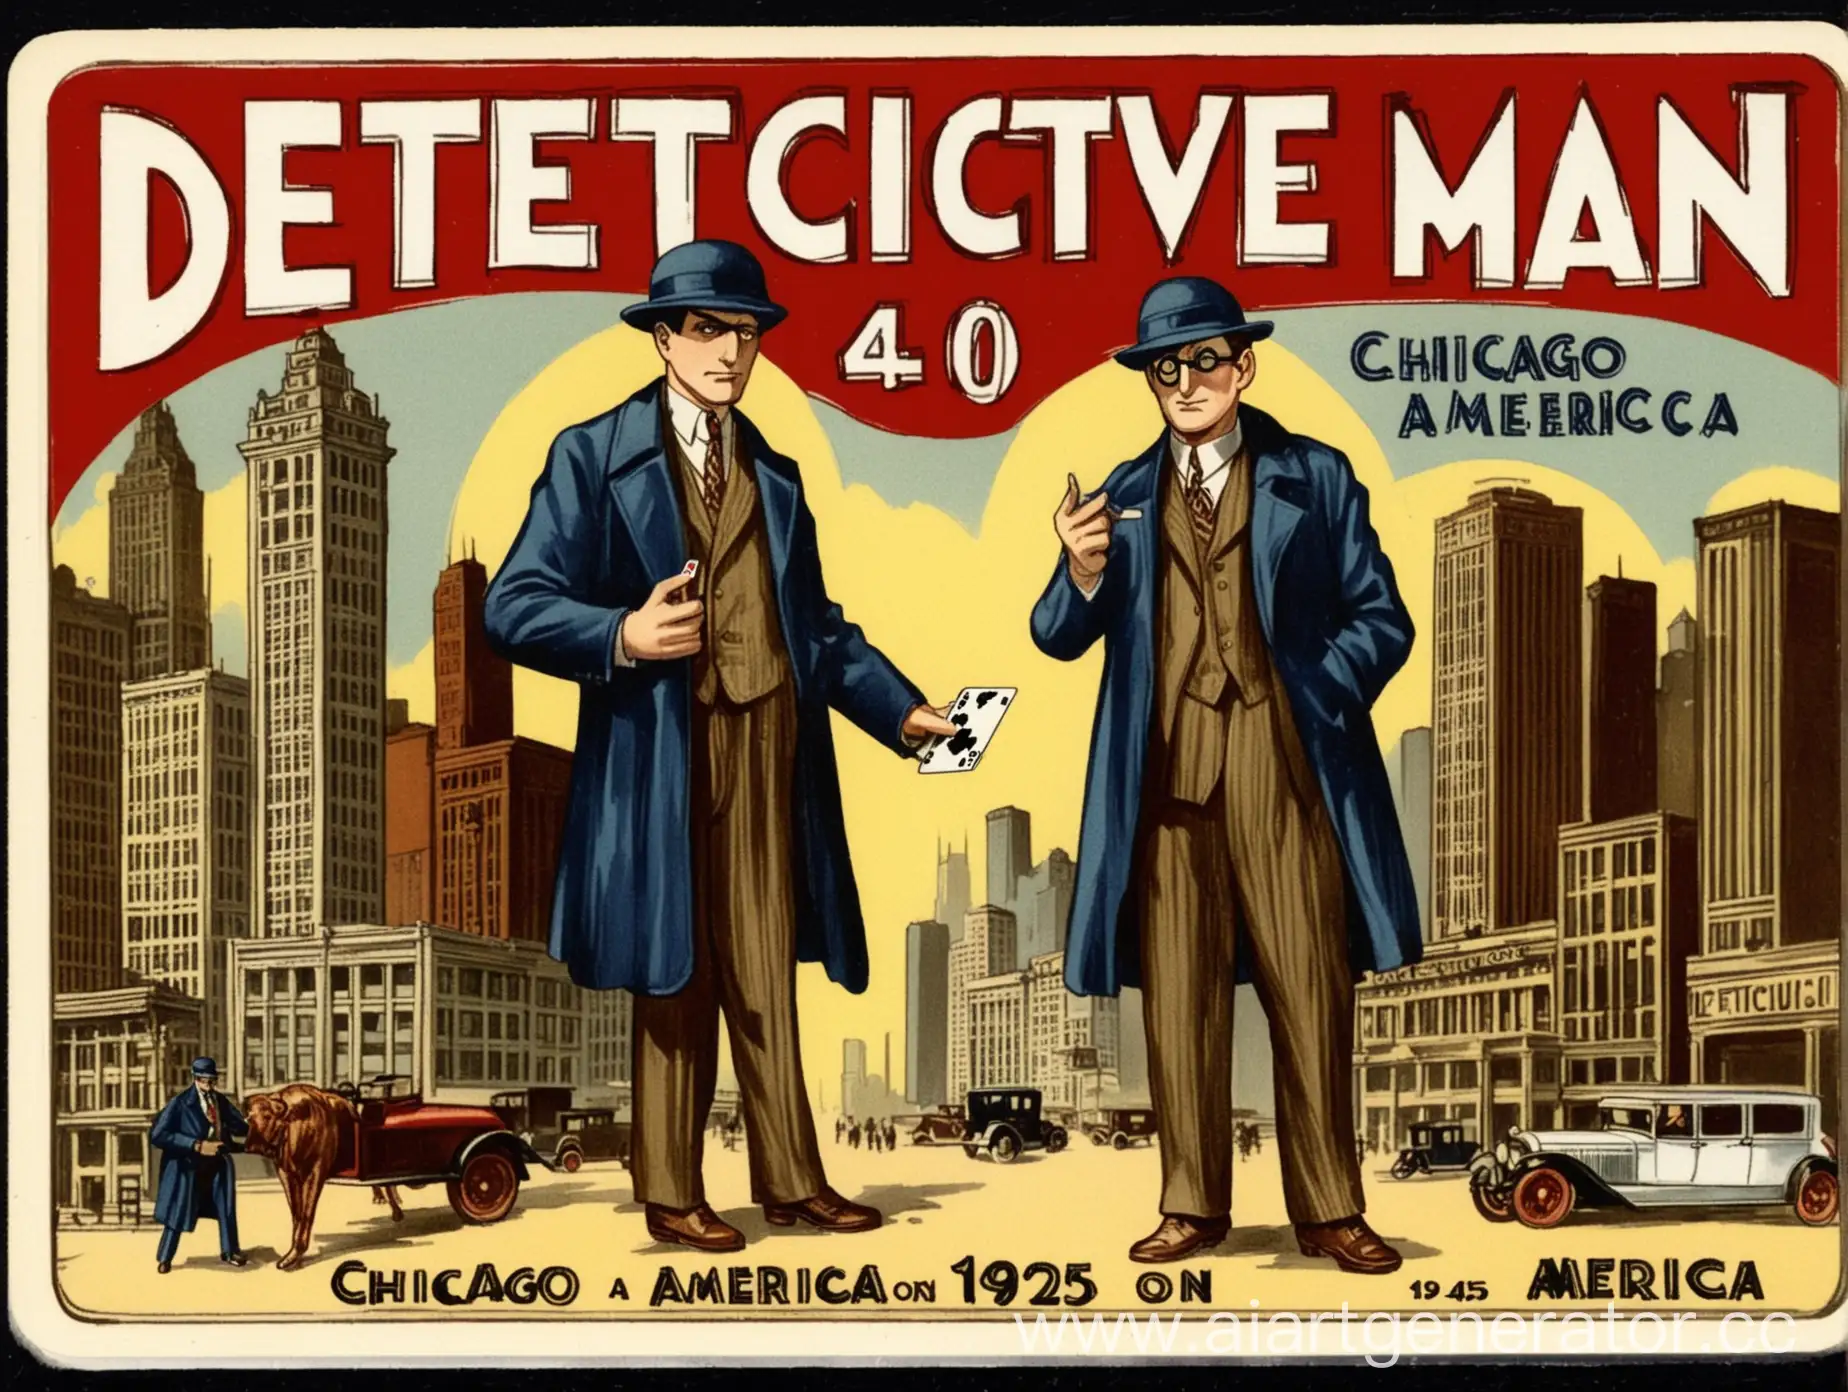 Детектив мужчина 40 лет Чикаго 1925 Америка изображен на карточке